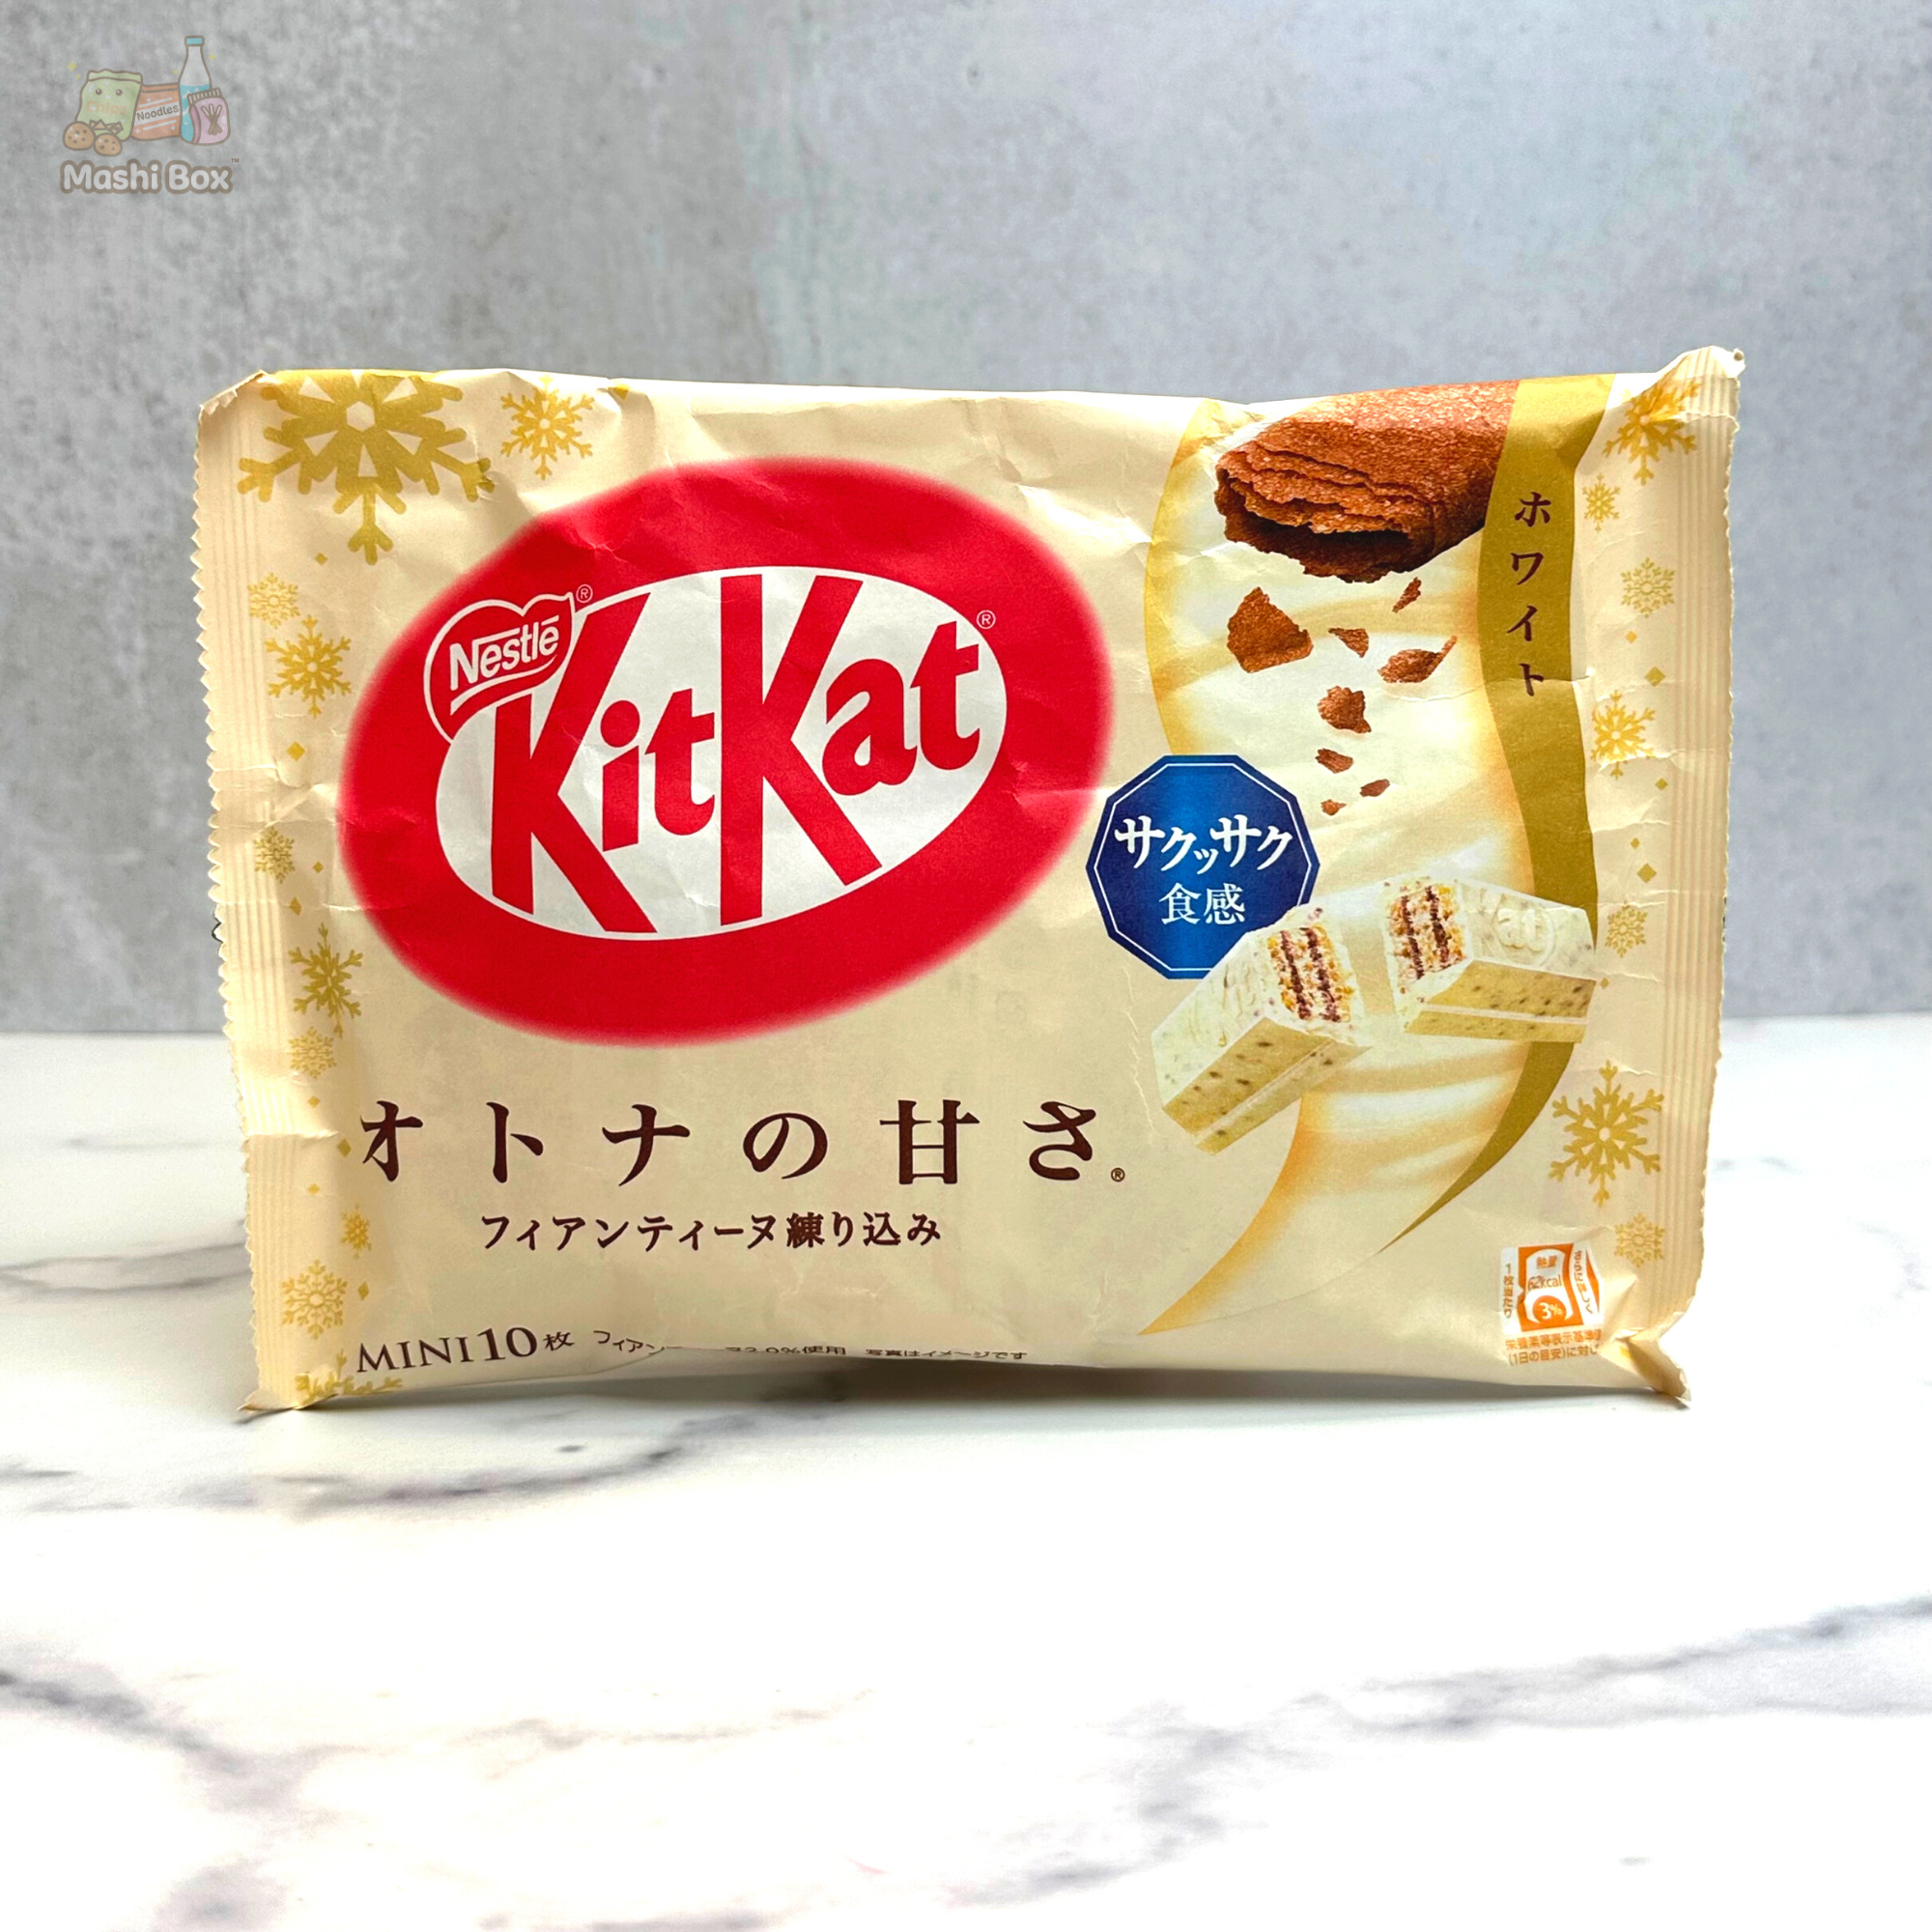 Japanese Kit Kat Strawberry Flavor KitKat Chocolates